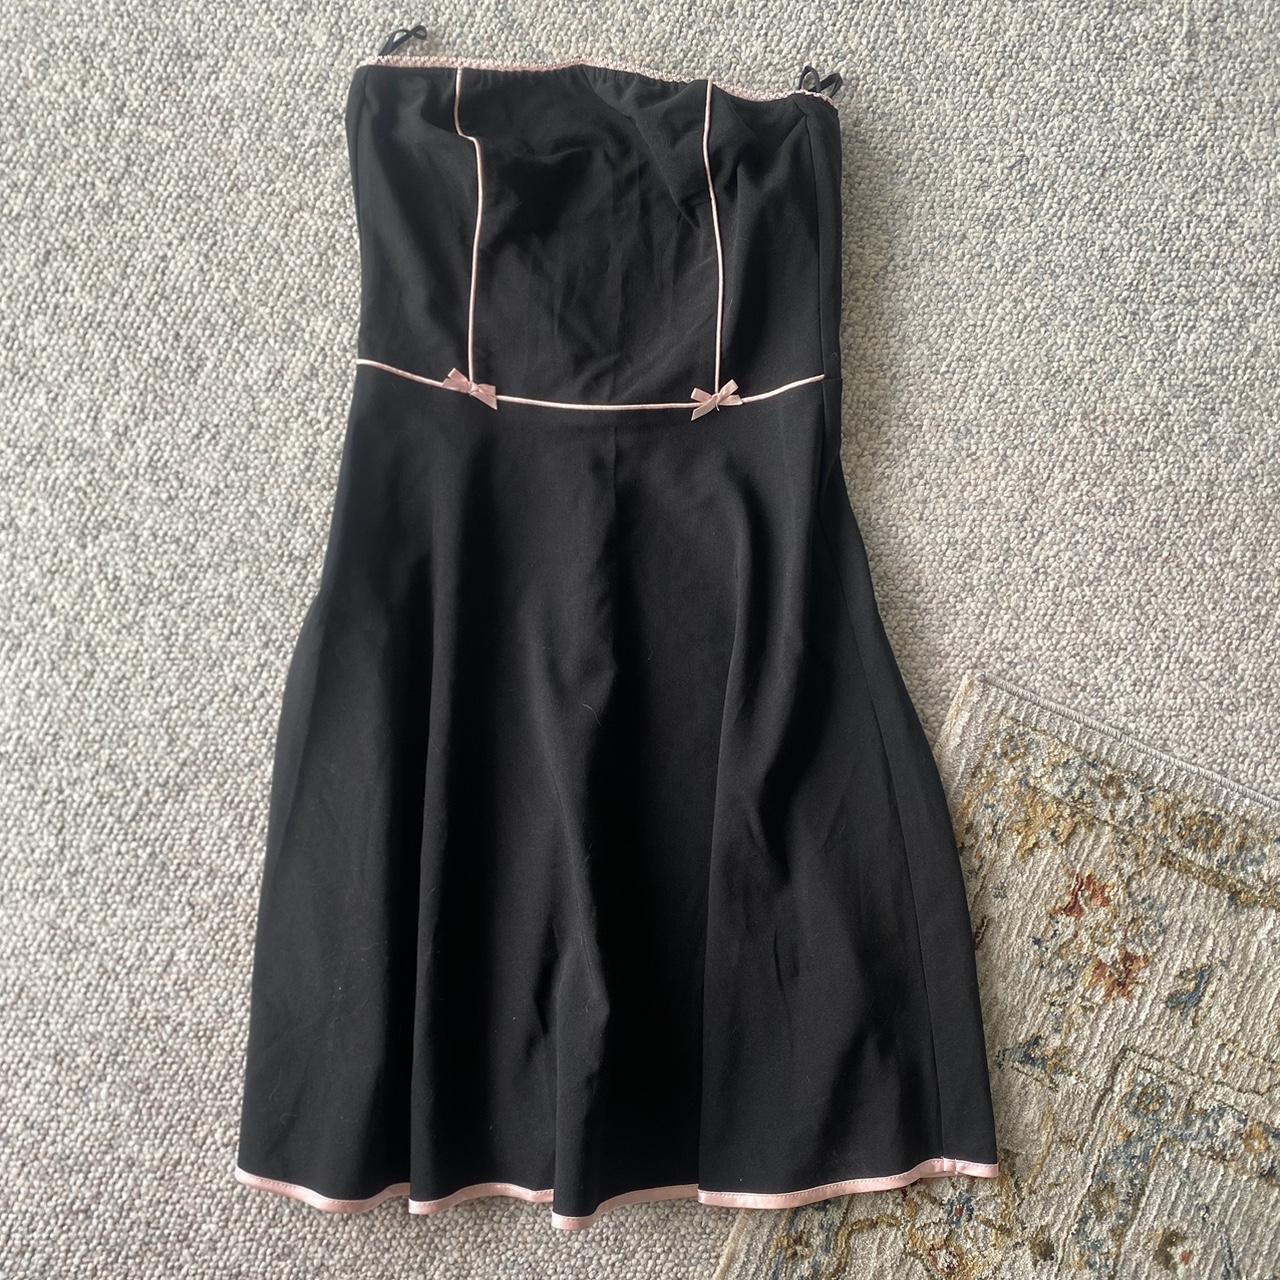 Ruby Rox Women's Black and Pink Dress | Depop